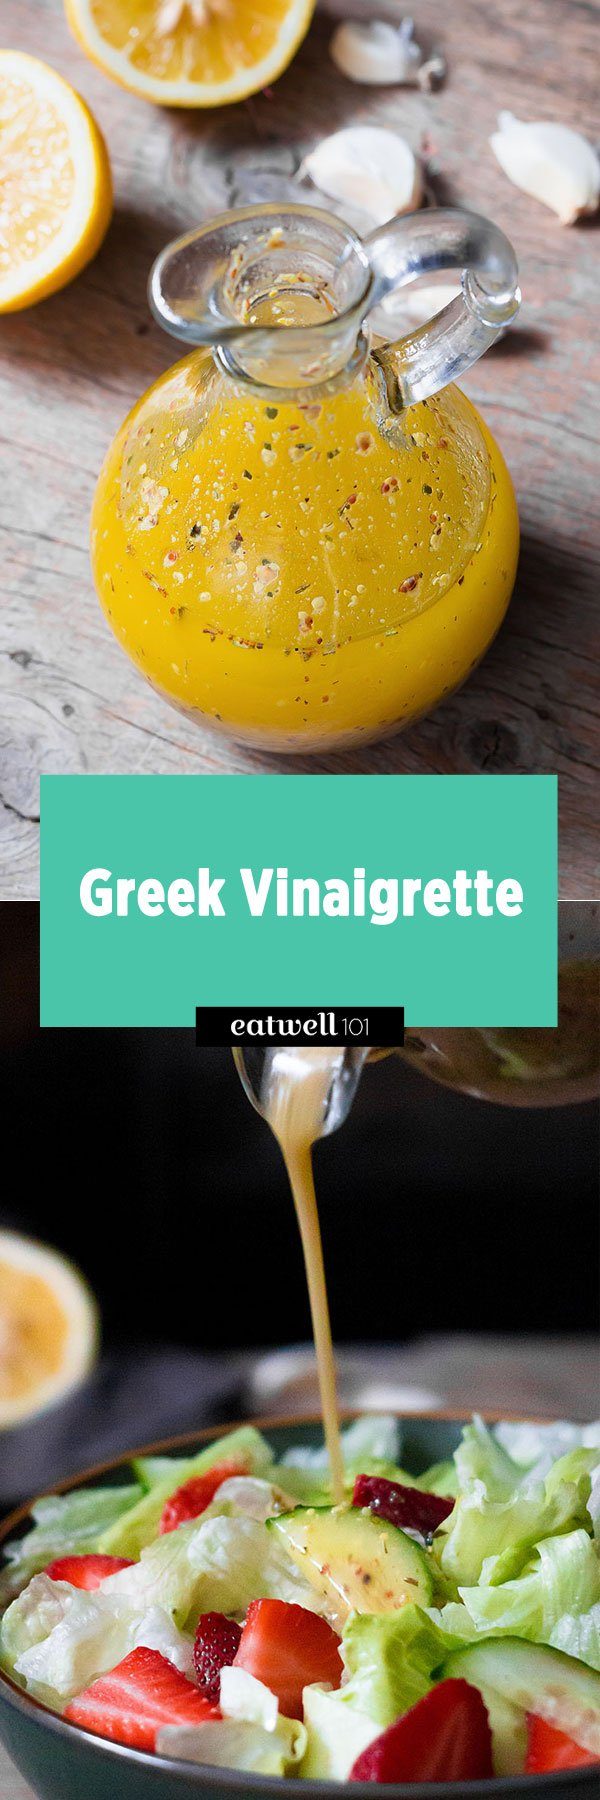 https://www.eatwell101.com/wp-content/uploads/2017/03/Greek-Vinaigrette.jpg